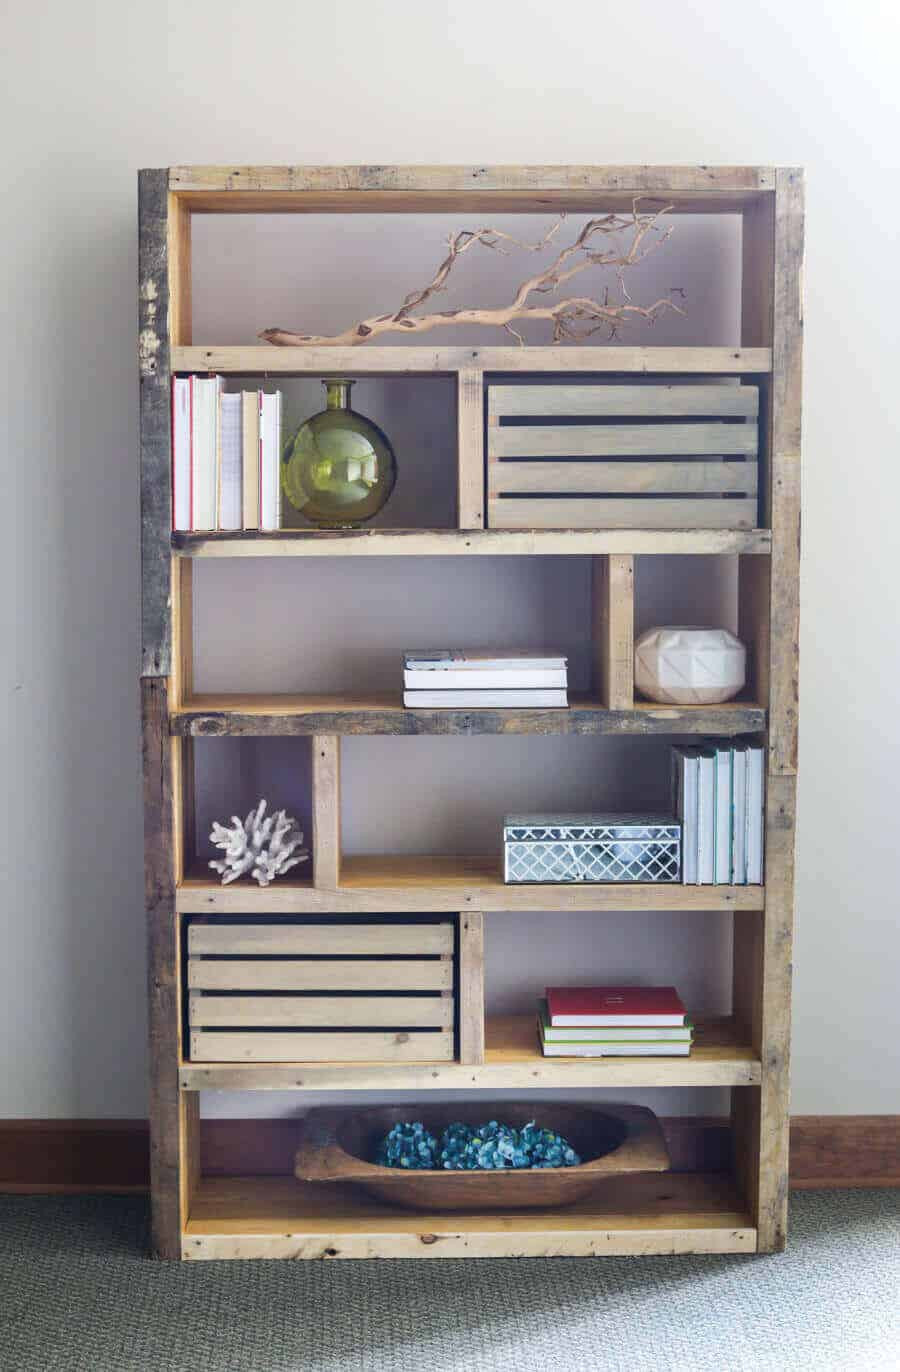 DIY Wood Pallet Shelf
 33 Diy Pallet Shelves You’ll Want to Build to Get more